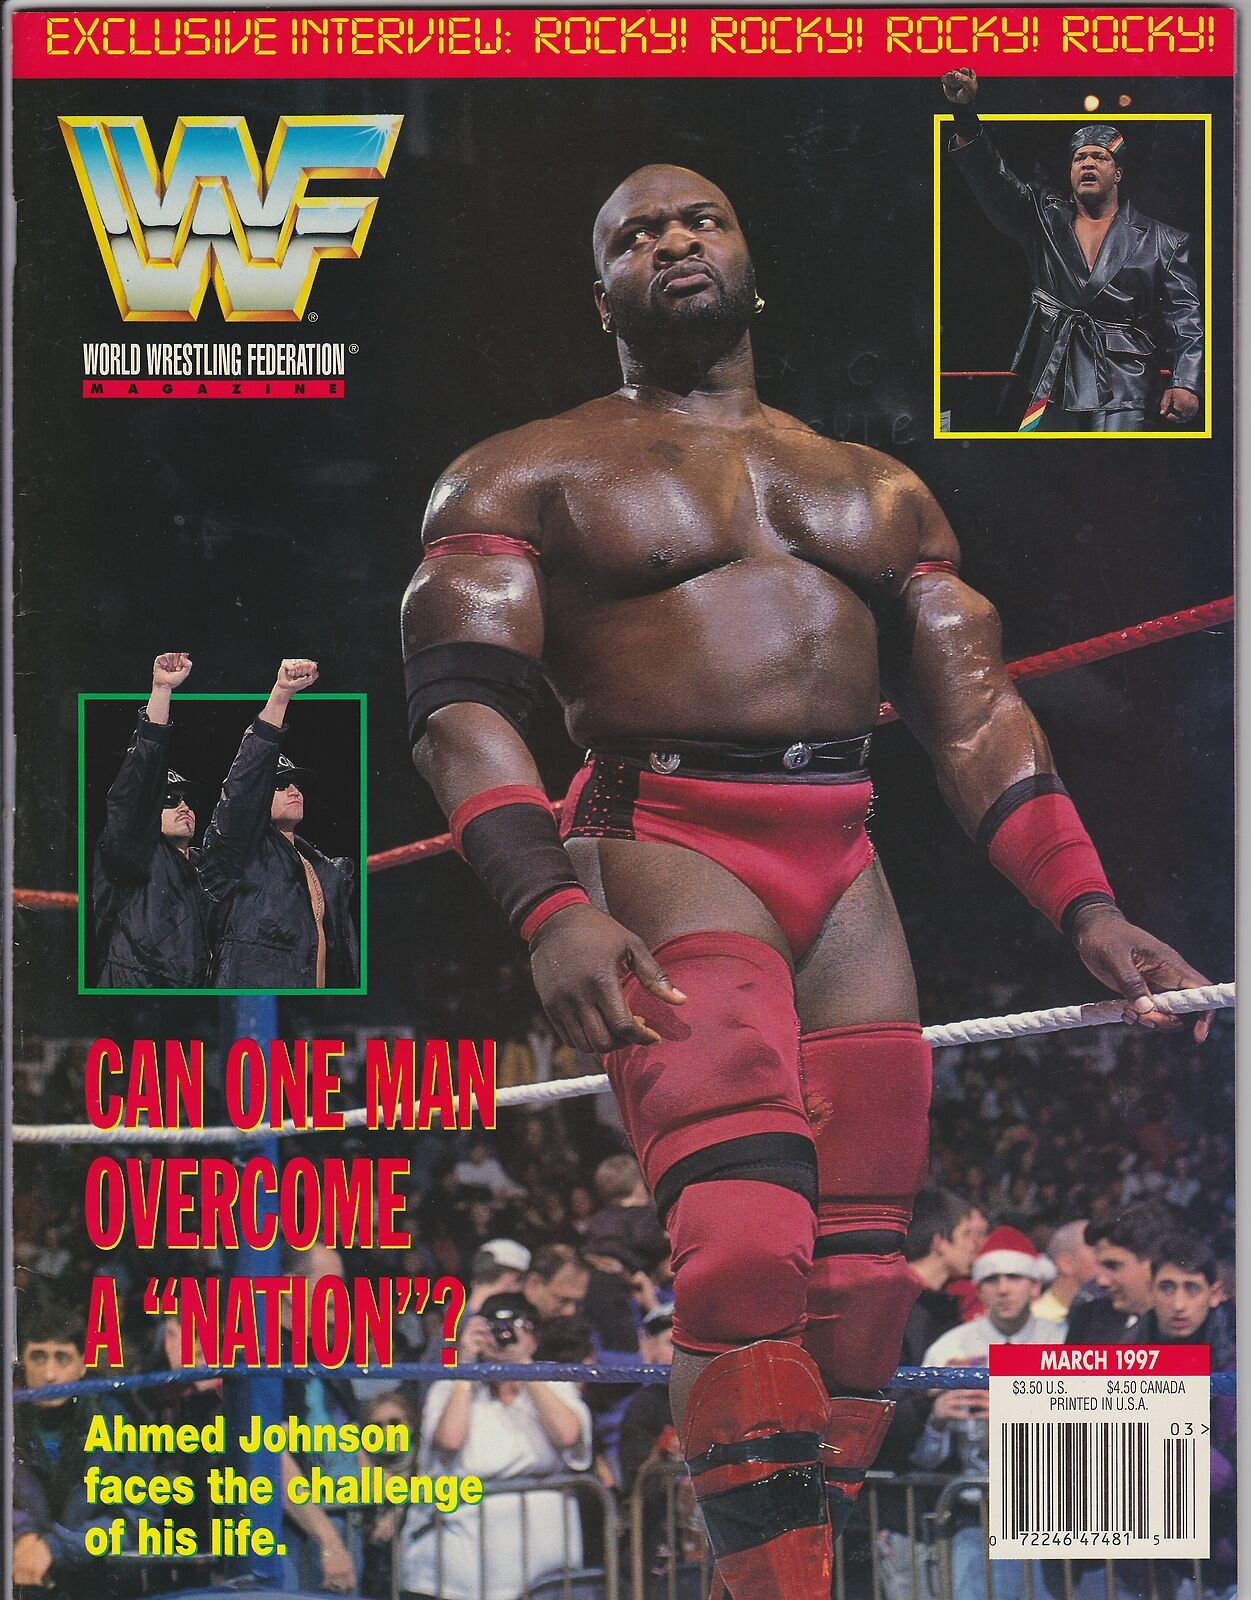 JULY 1999 WWE WWF WRESTLING MAGAZINE THE ROCK DWAYNE JOHNSON WRESTLEMANIA 